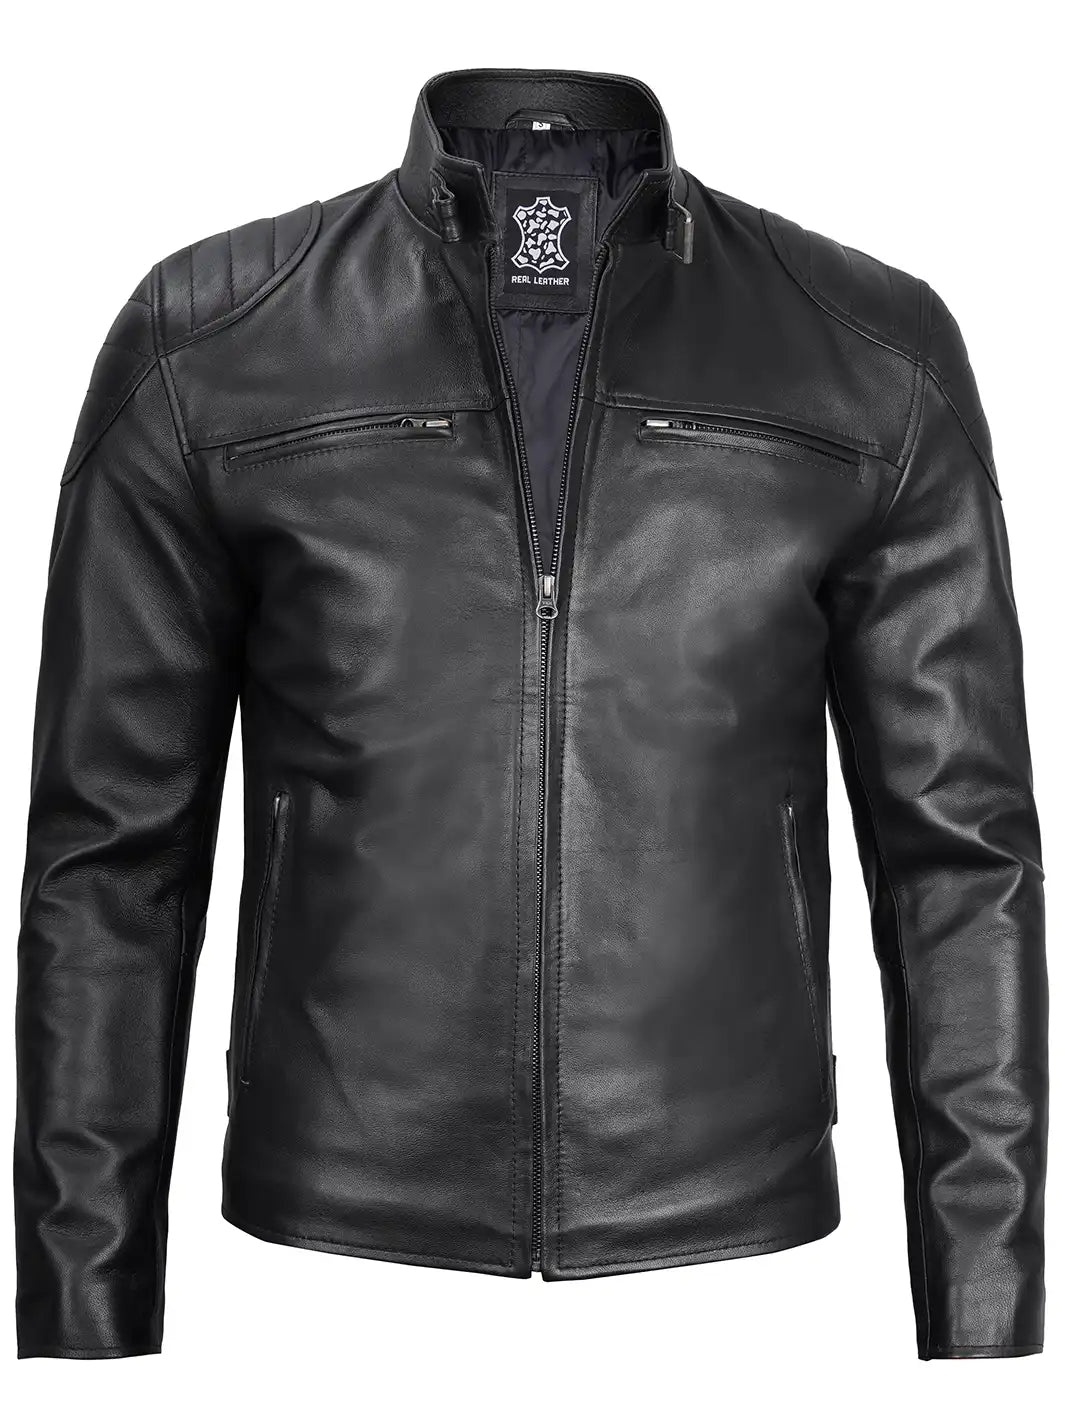 Mens Black leather jacket